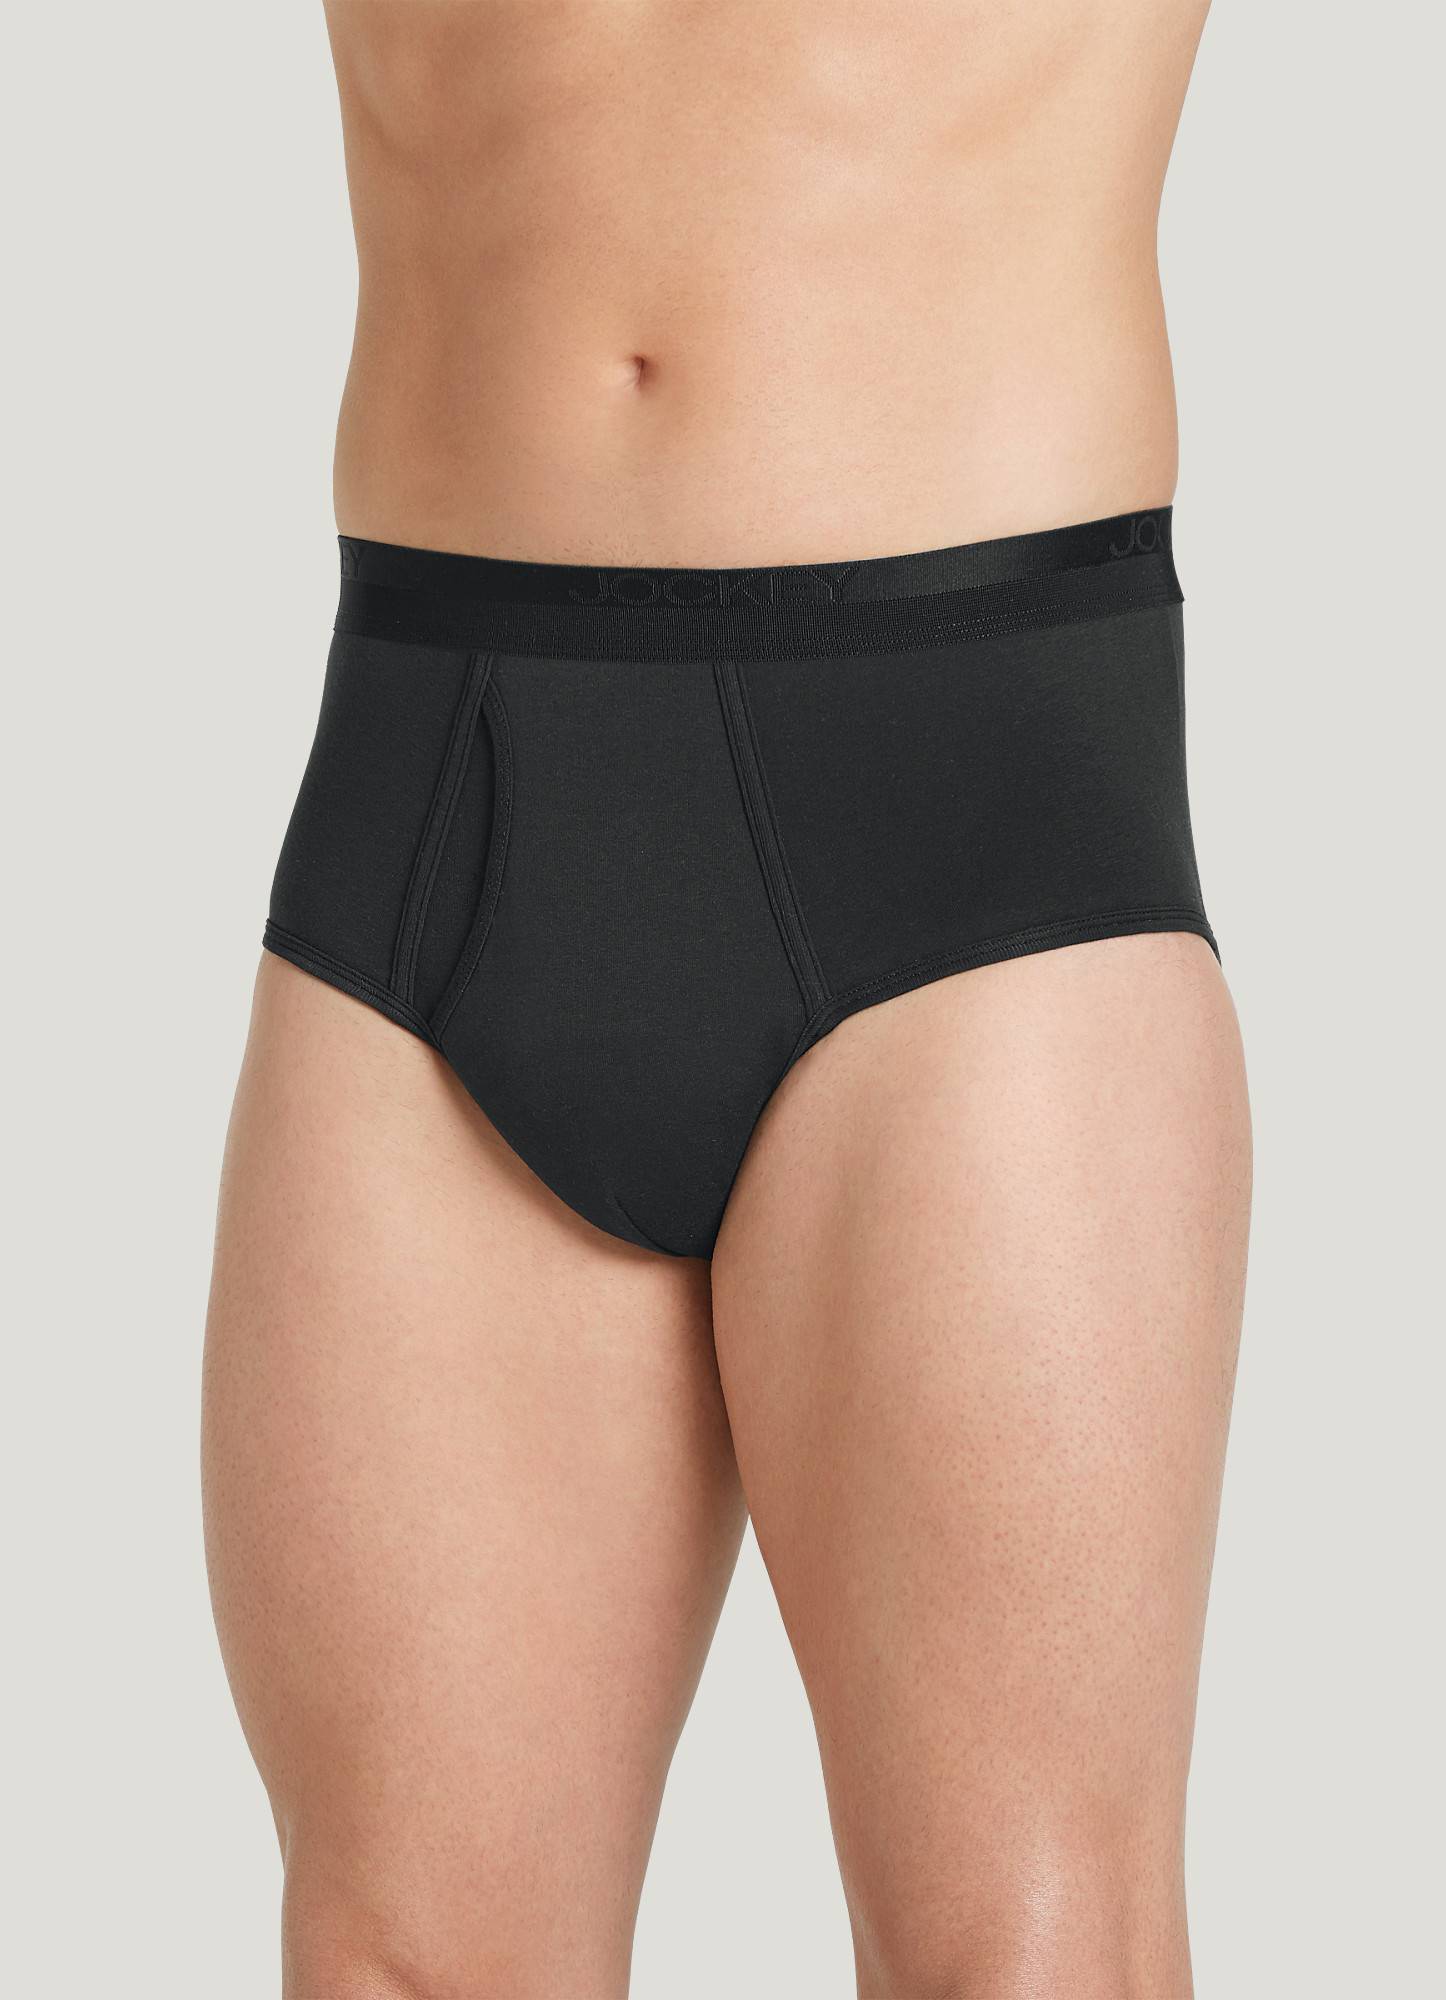 Jockey Men's Underwear Signature Pima Cotton Full-Rise Brief - 4 Pack